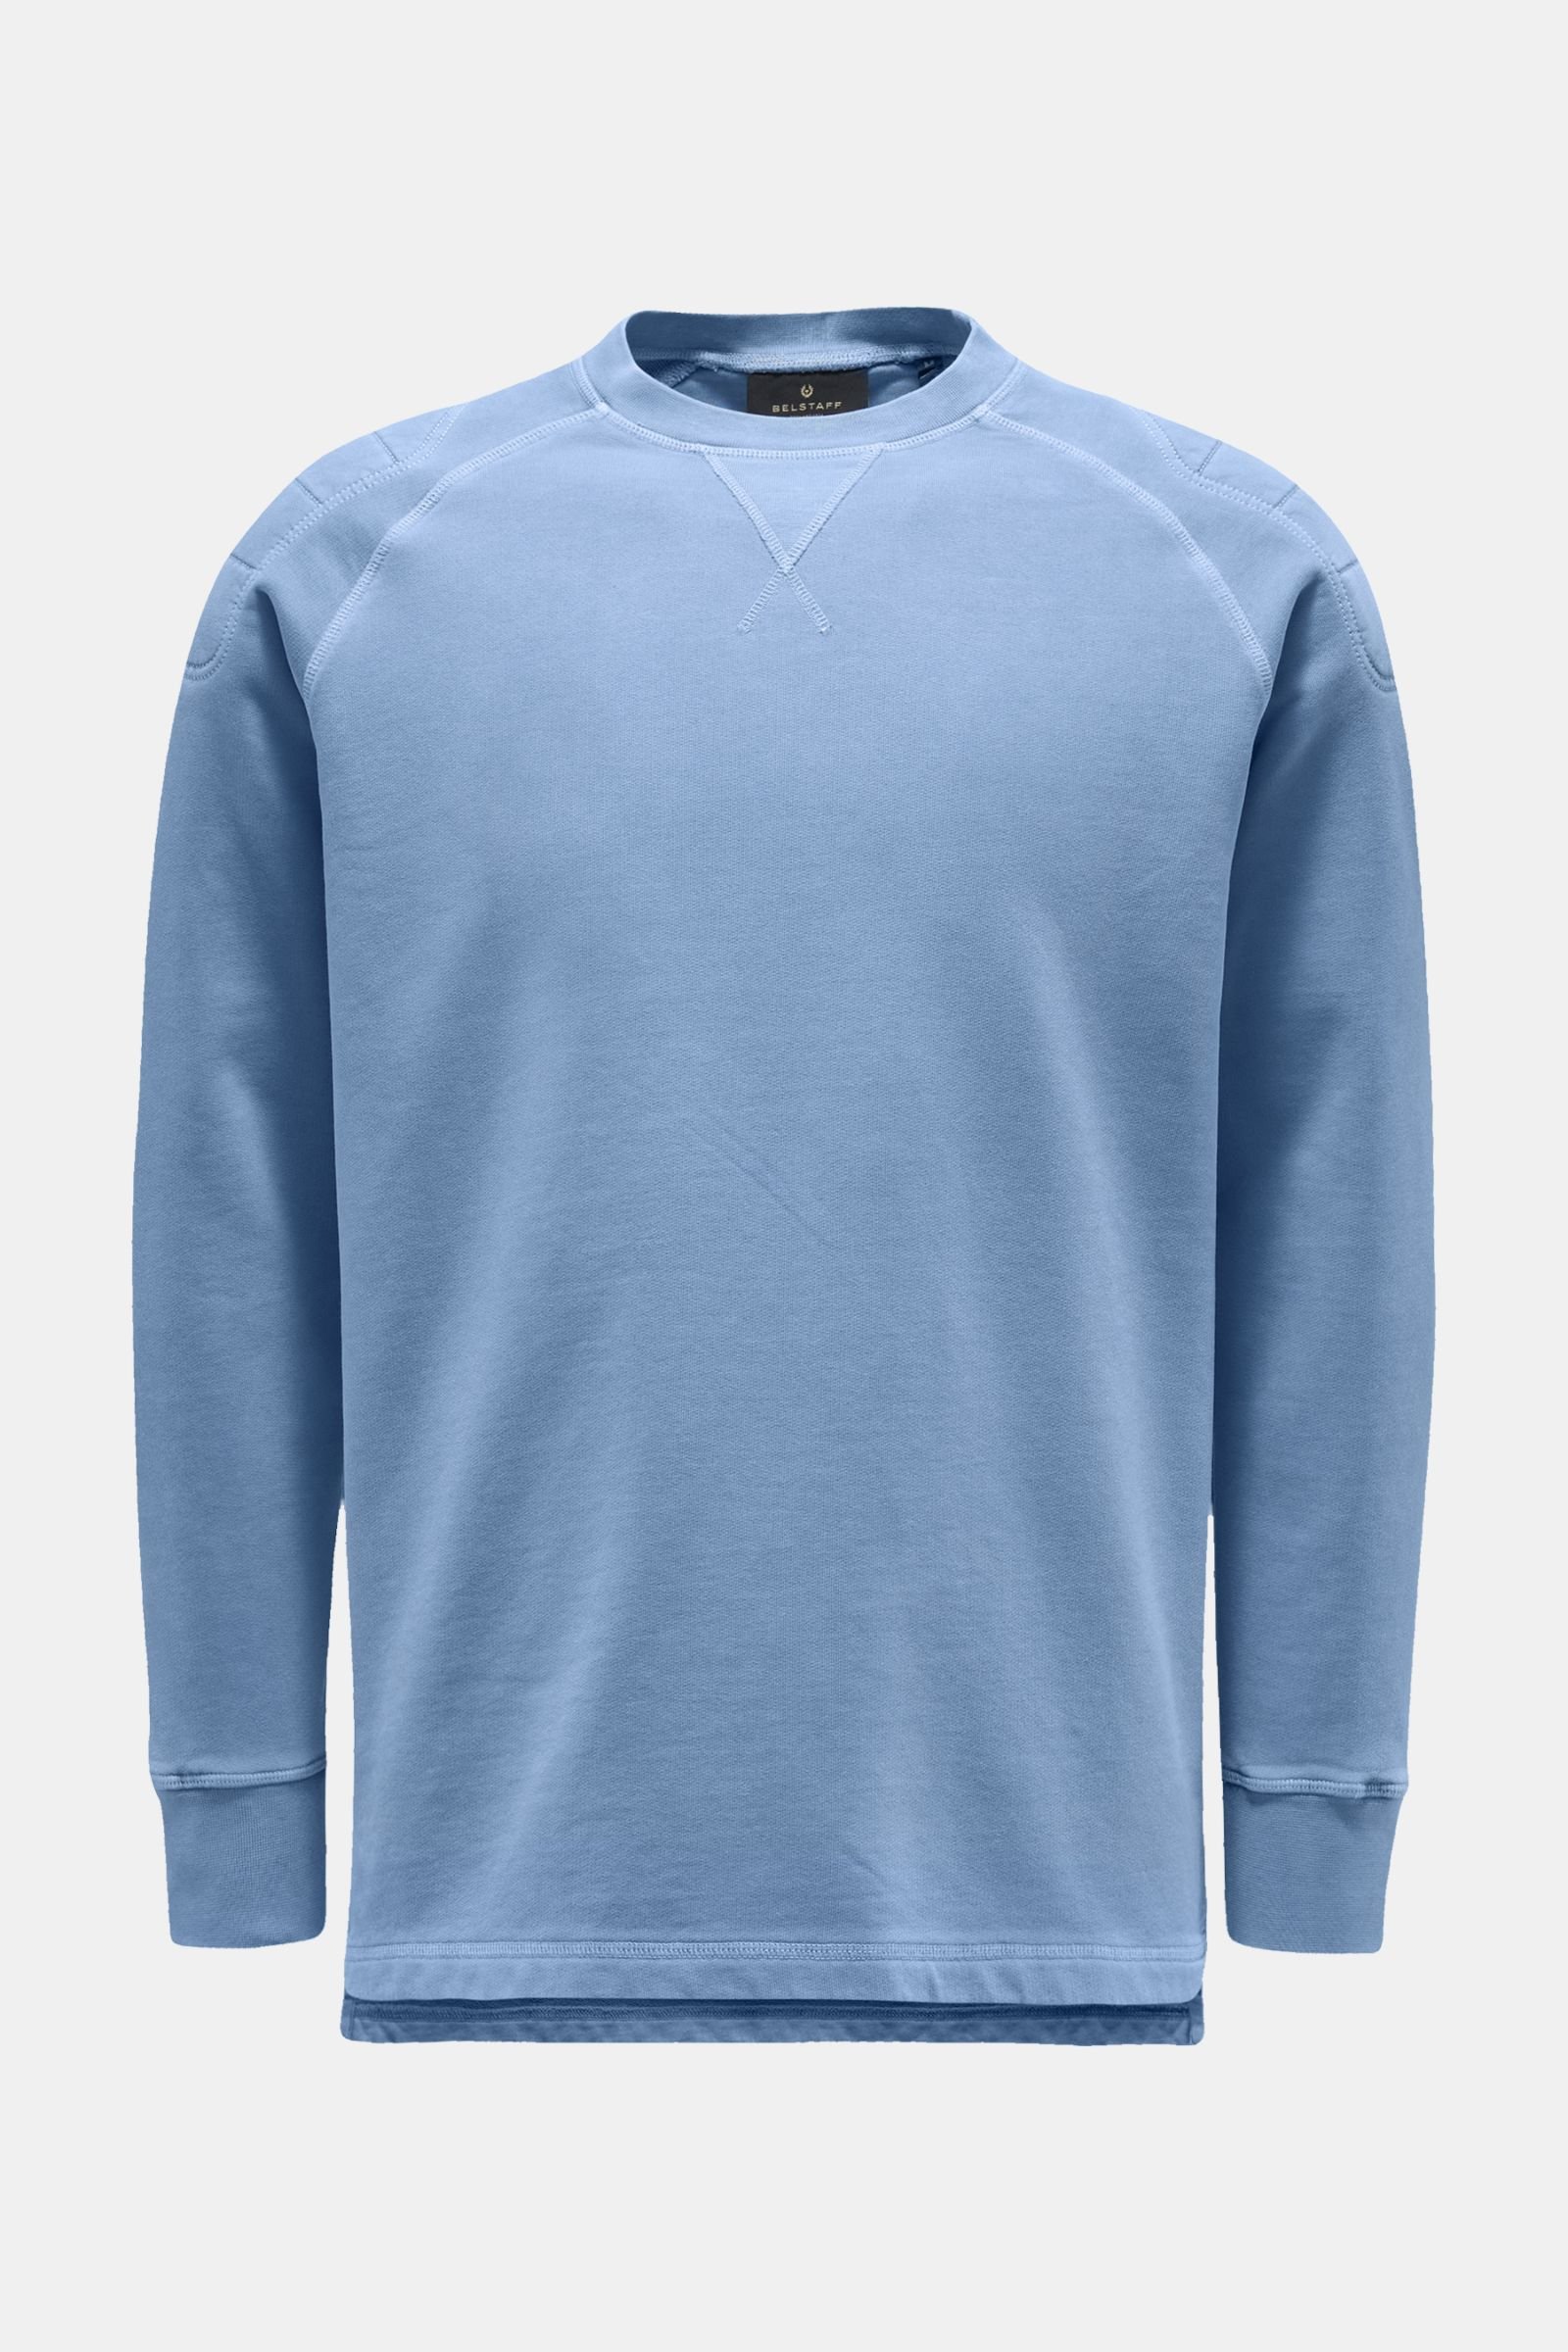 Crew neck sweatshirt light blue